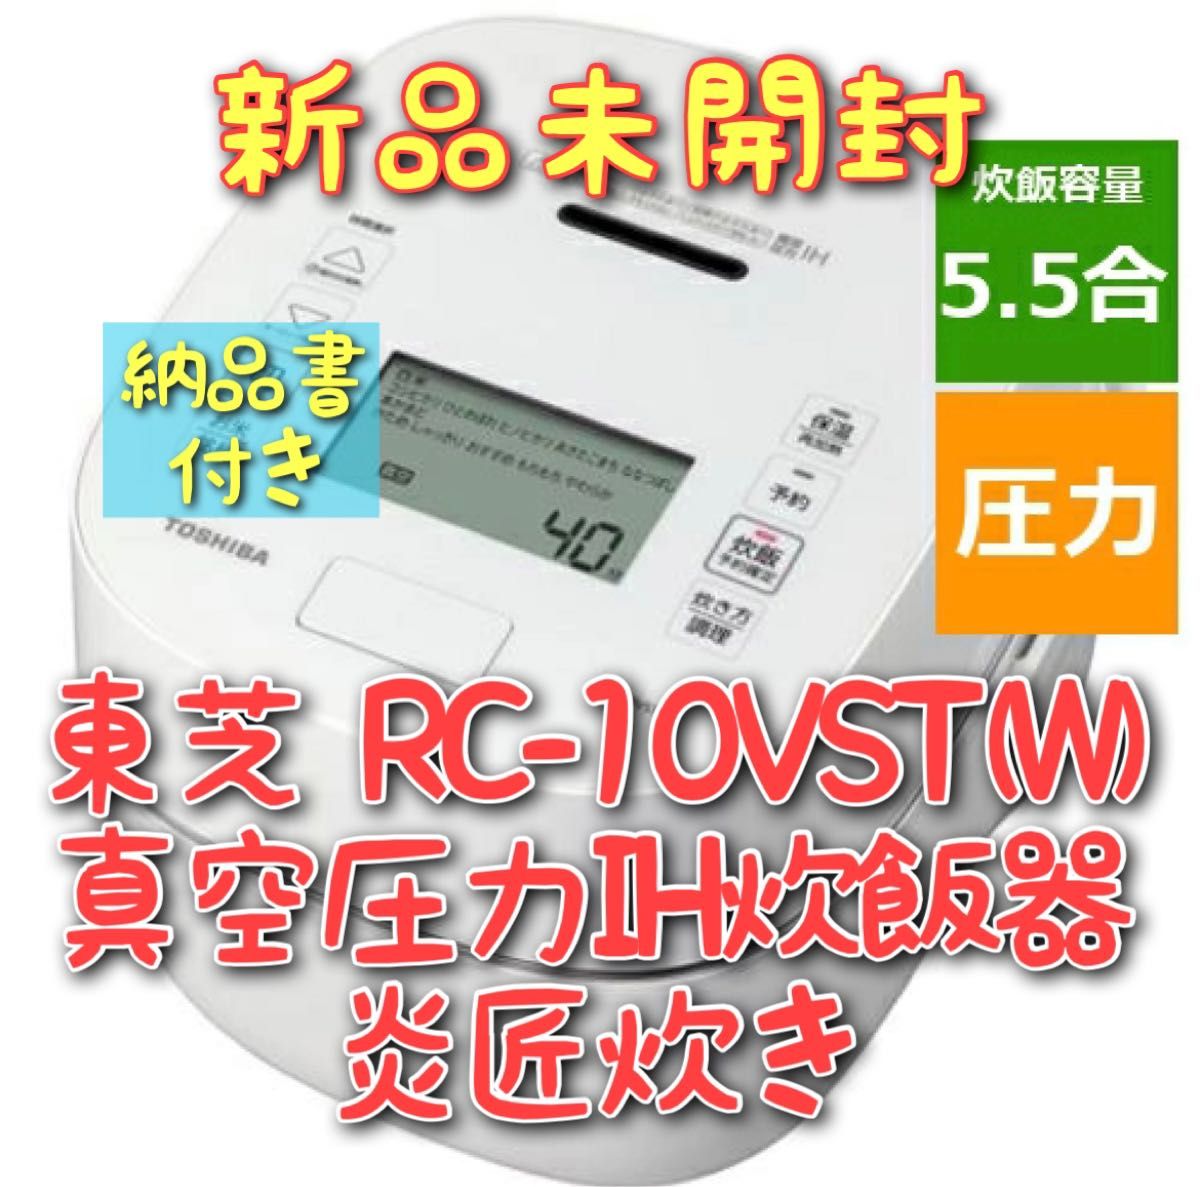 TOSHIBA真空圧力IH炊飯器炎匠炊きRC-10VST(W) キッチン家電 炊飯器 www